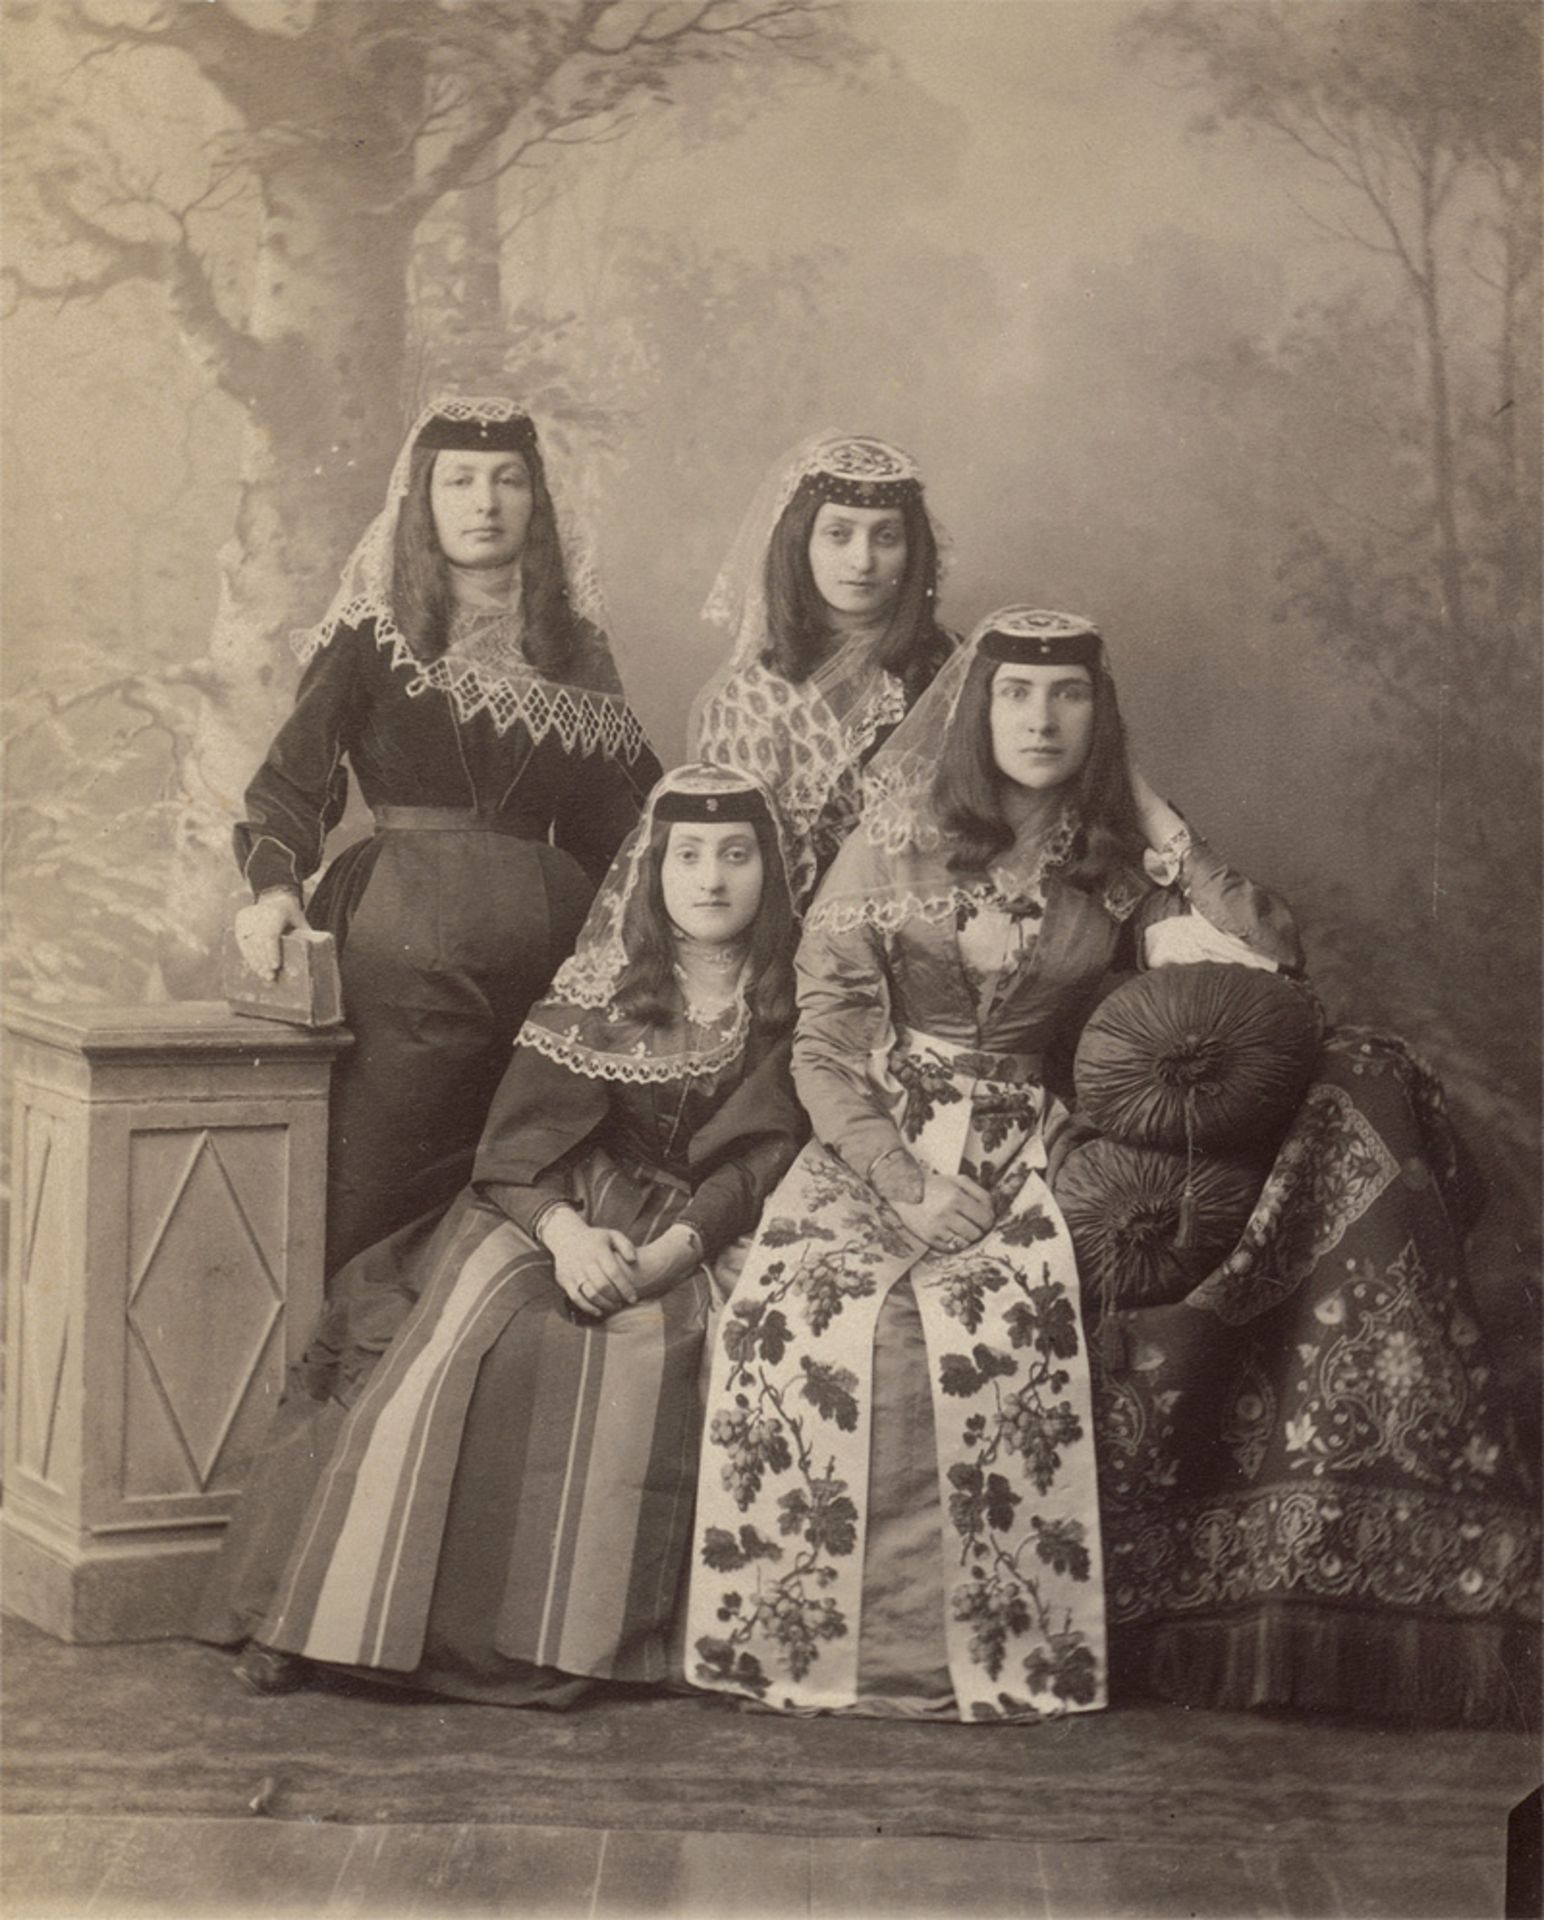 Ermakov, Dimitri N.: Studio group portrait of women in national dress